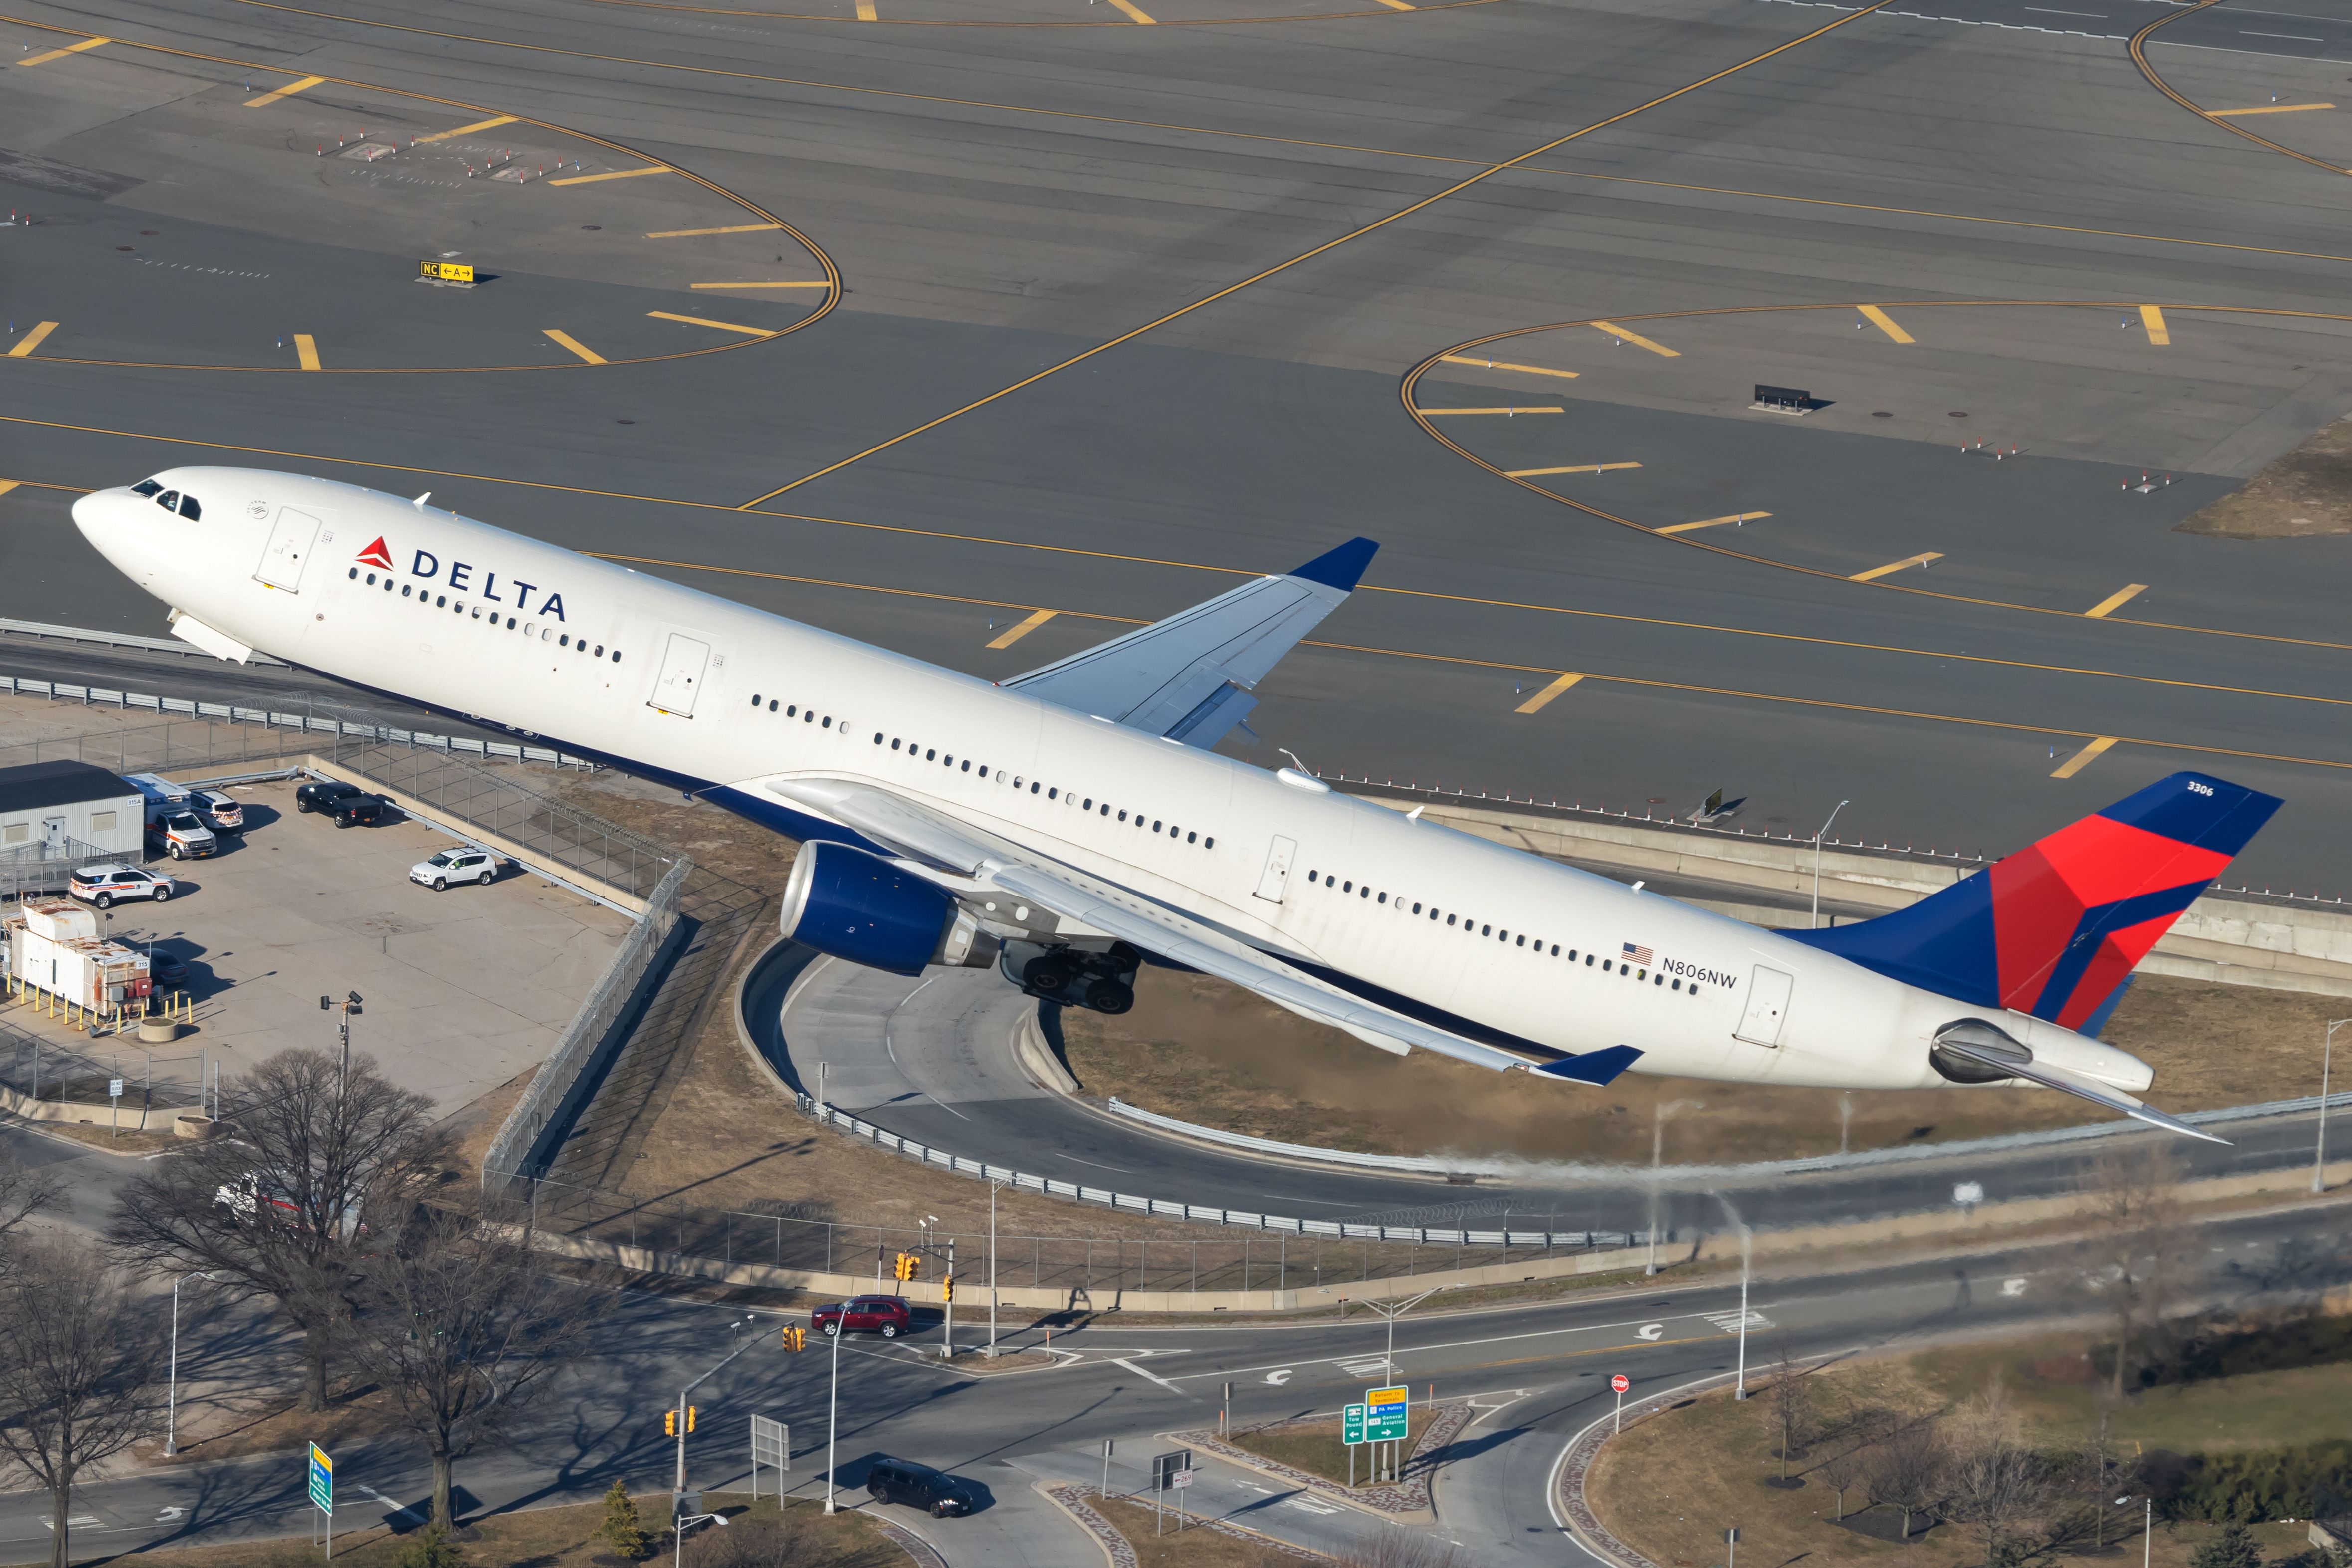 A Delta Air Lines Airbus A330-300